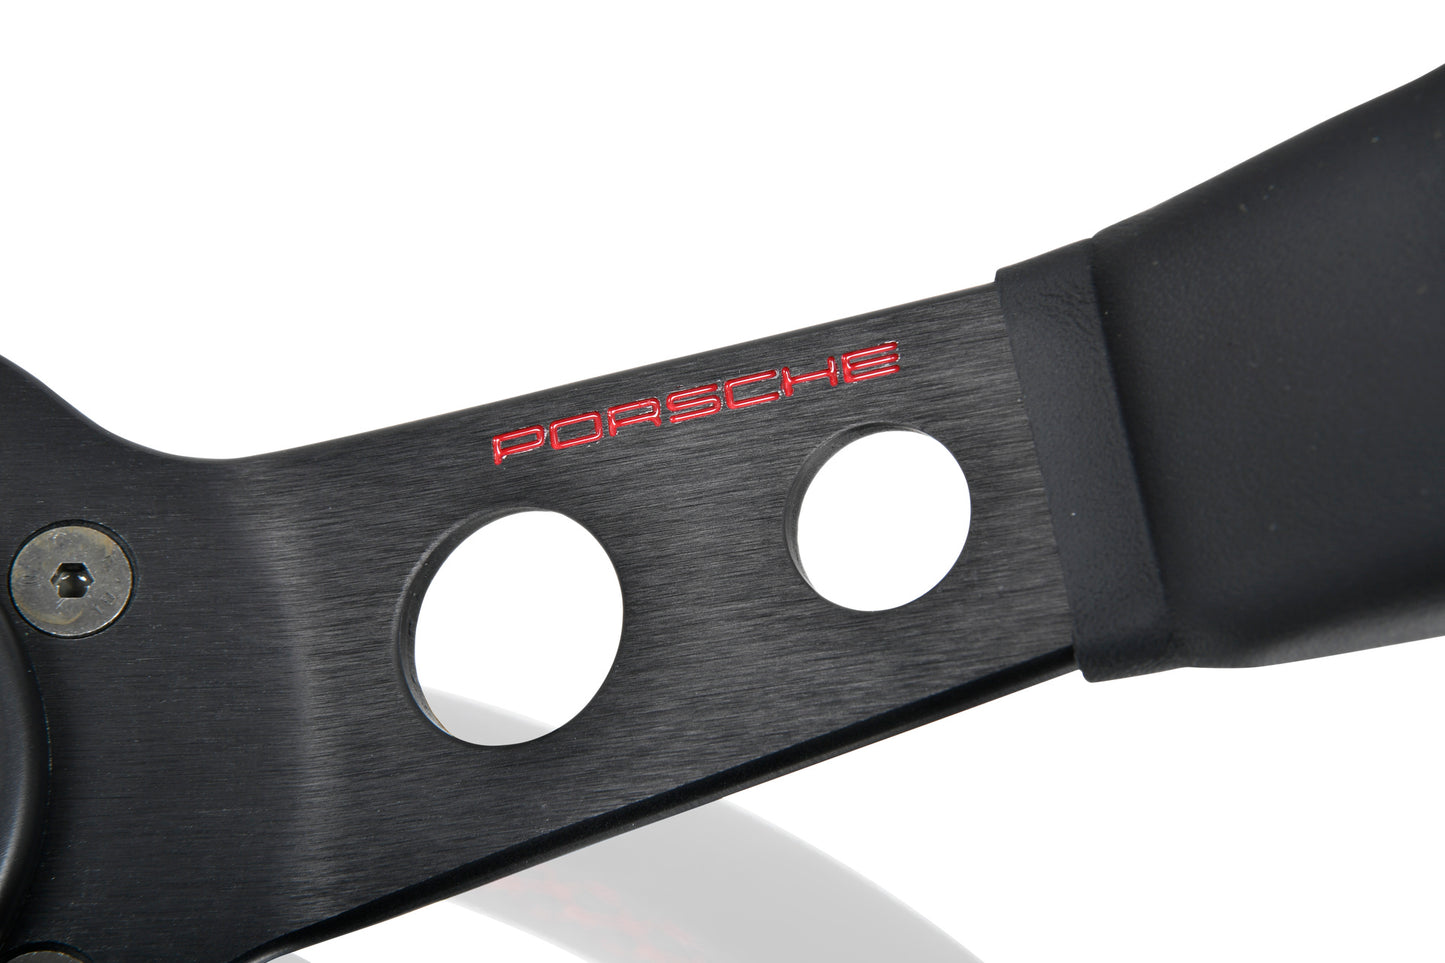 Porsche Classic performance steering wheel, red stitching